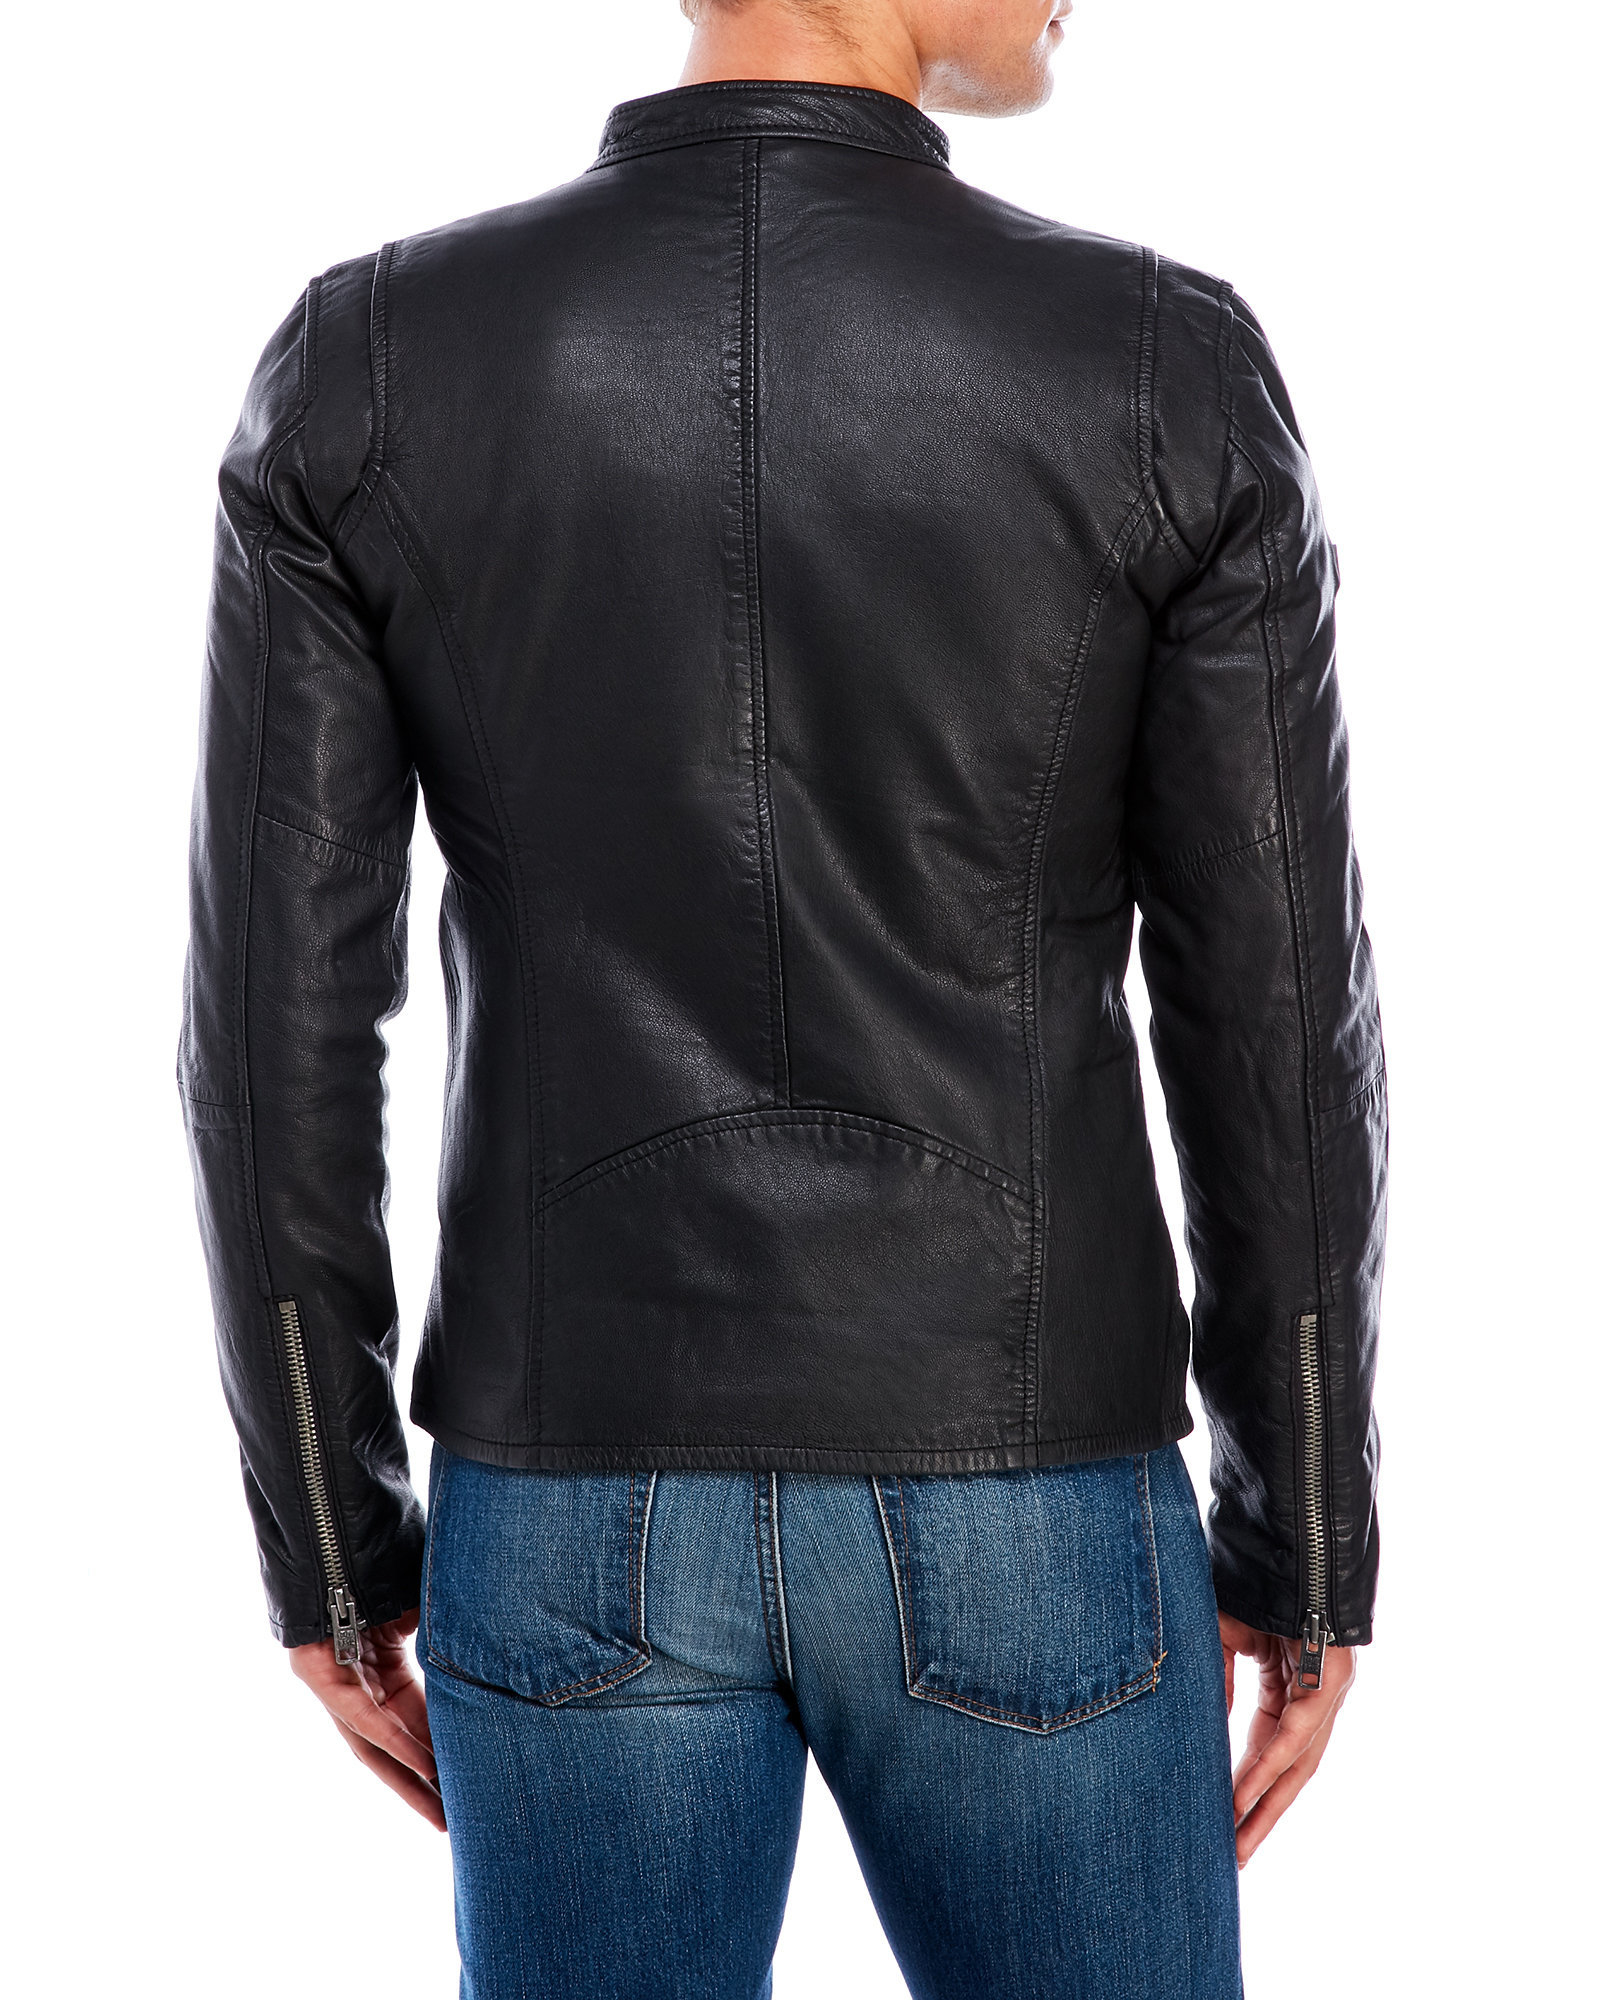 Superdry Real Hero Leather Biker Jacket in Black for Men - Lyst